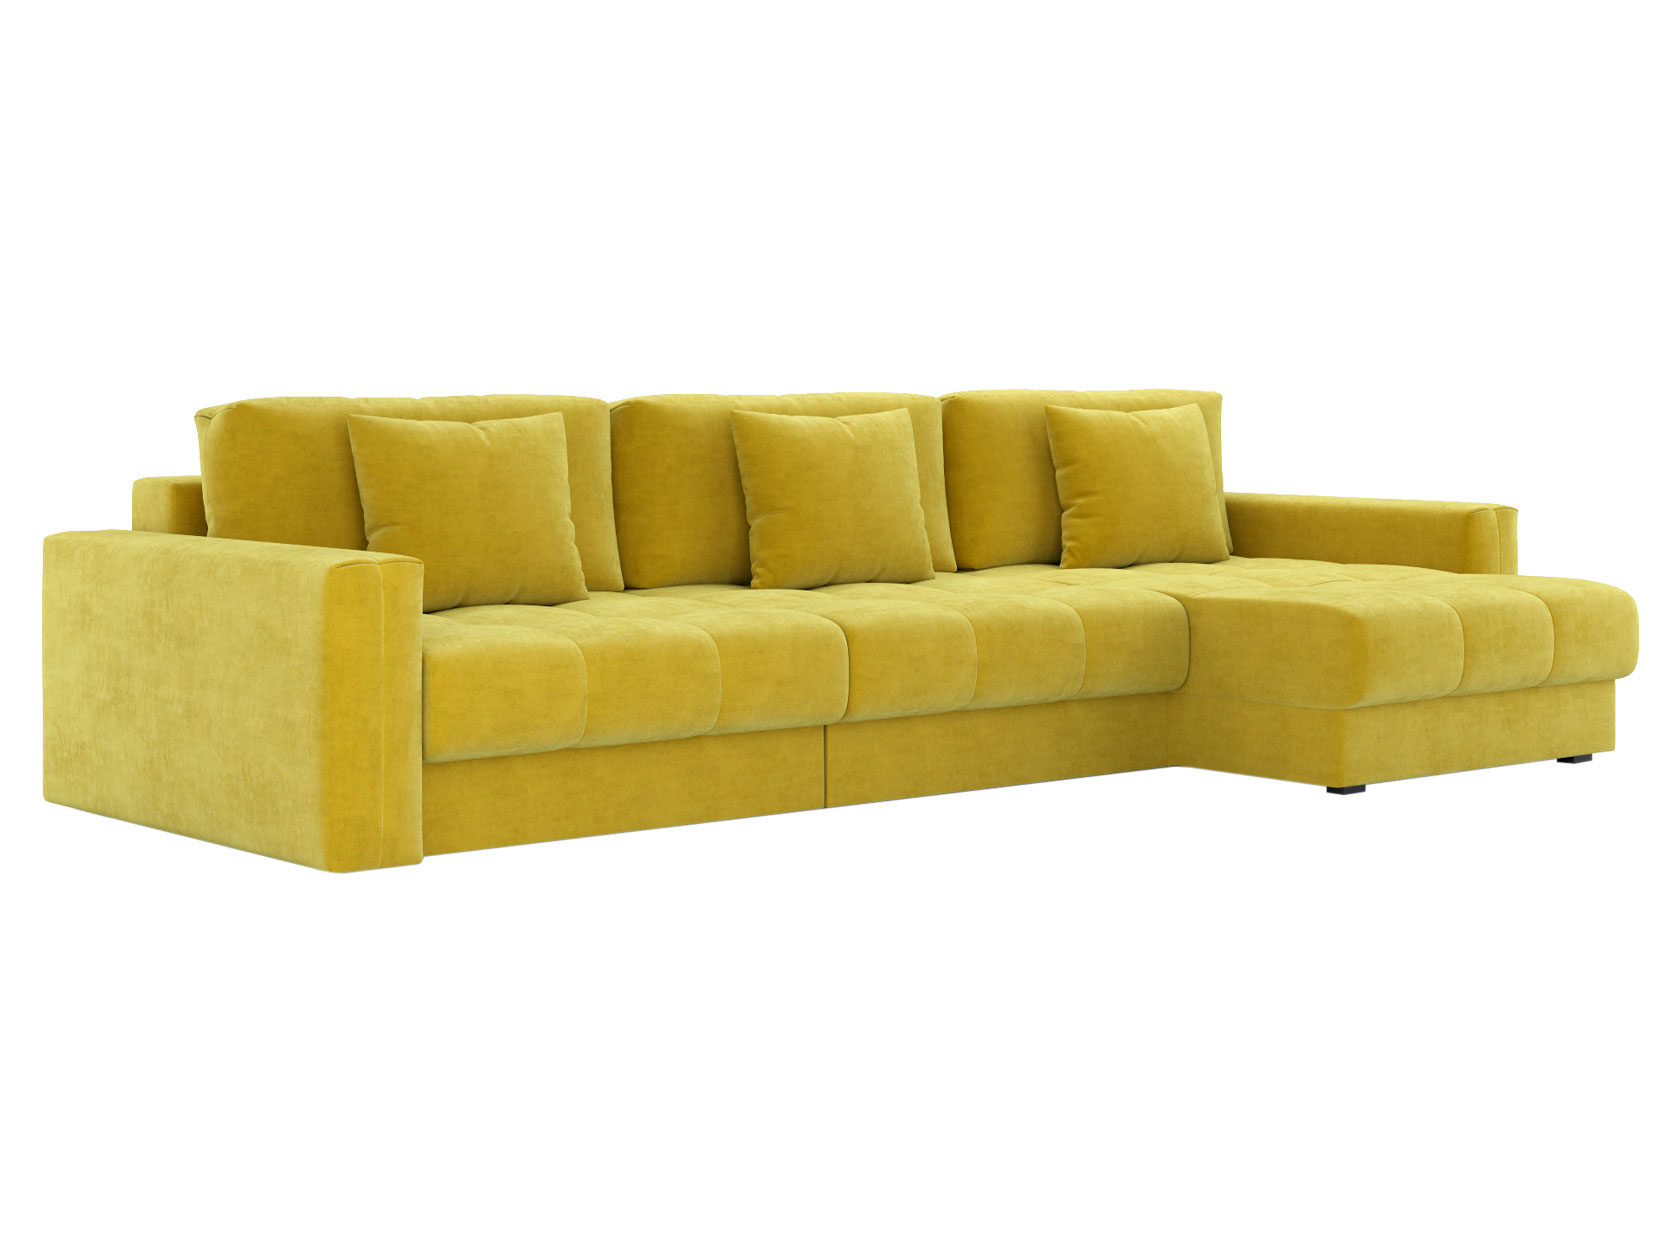 Угловой диван с оттоманкой Диван Клермон с оттоманкой Макси Клермон Макси фото 11